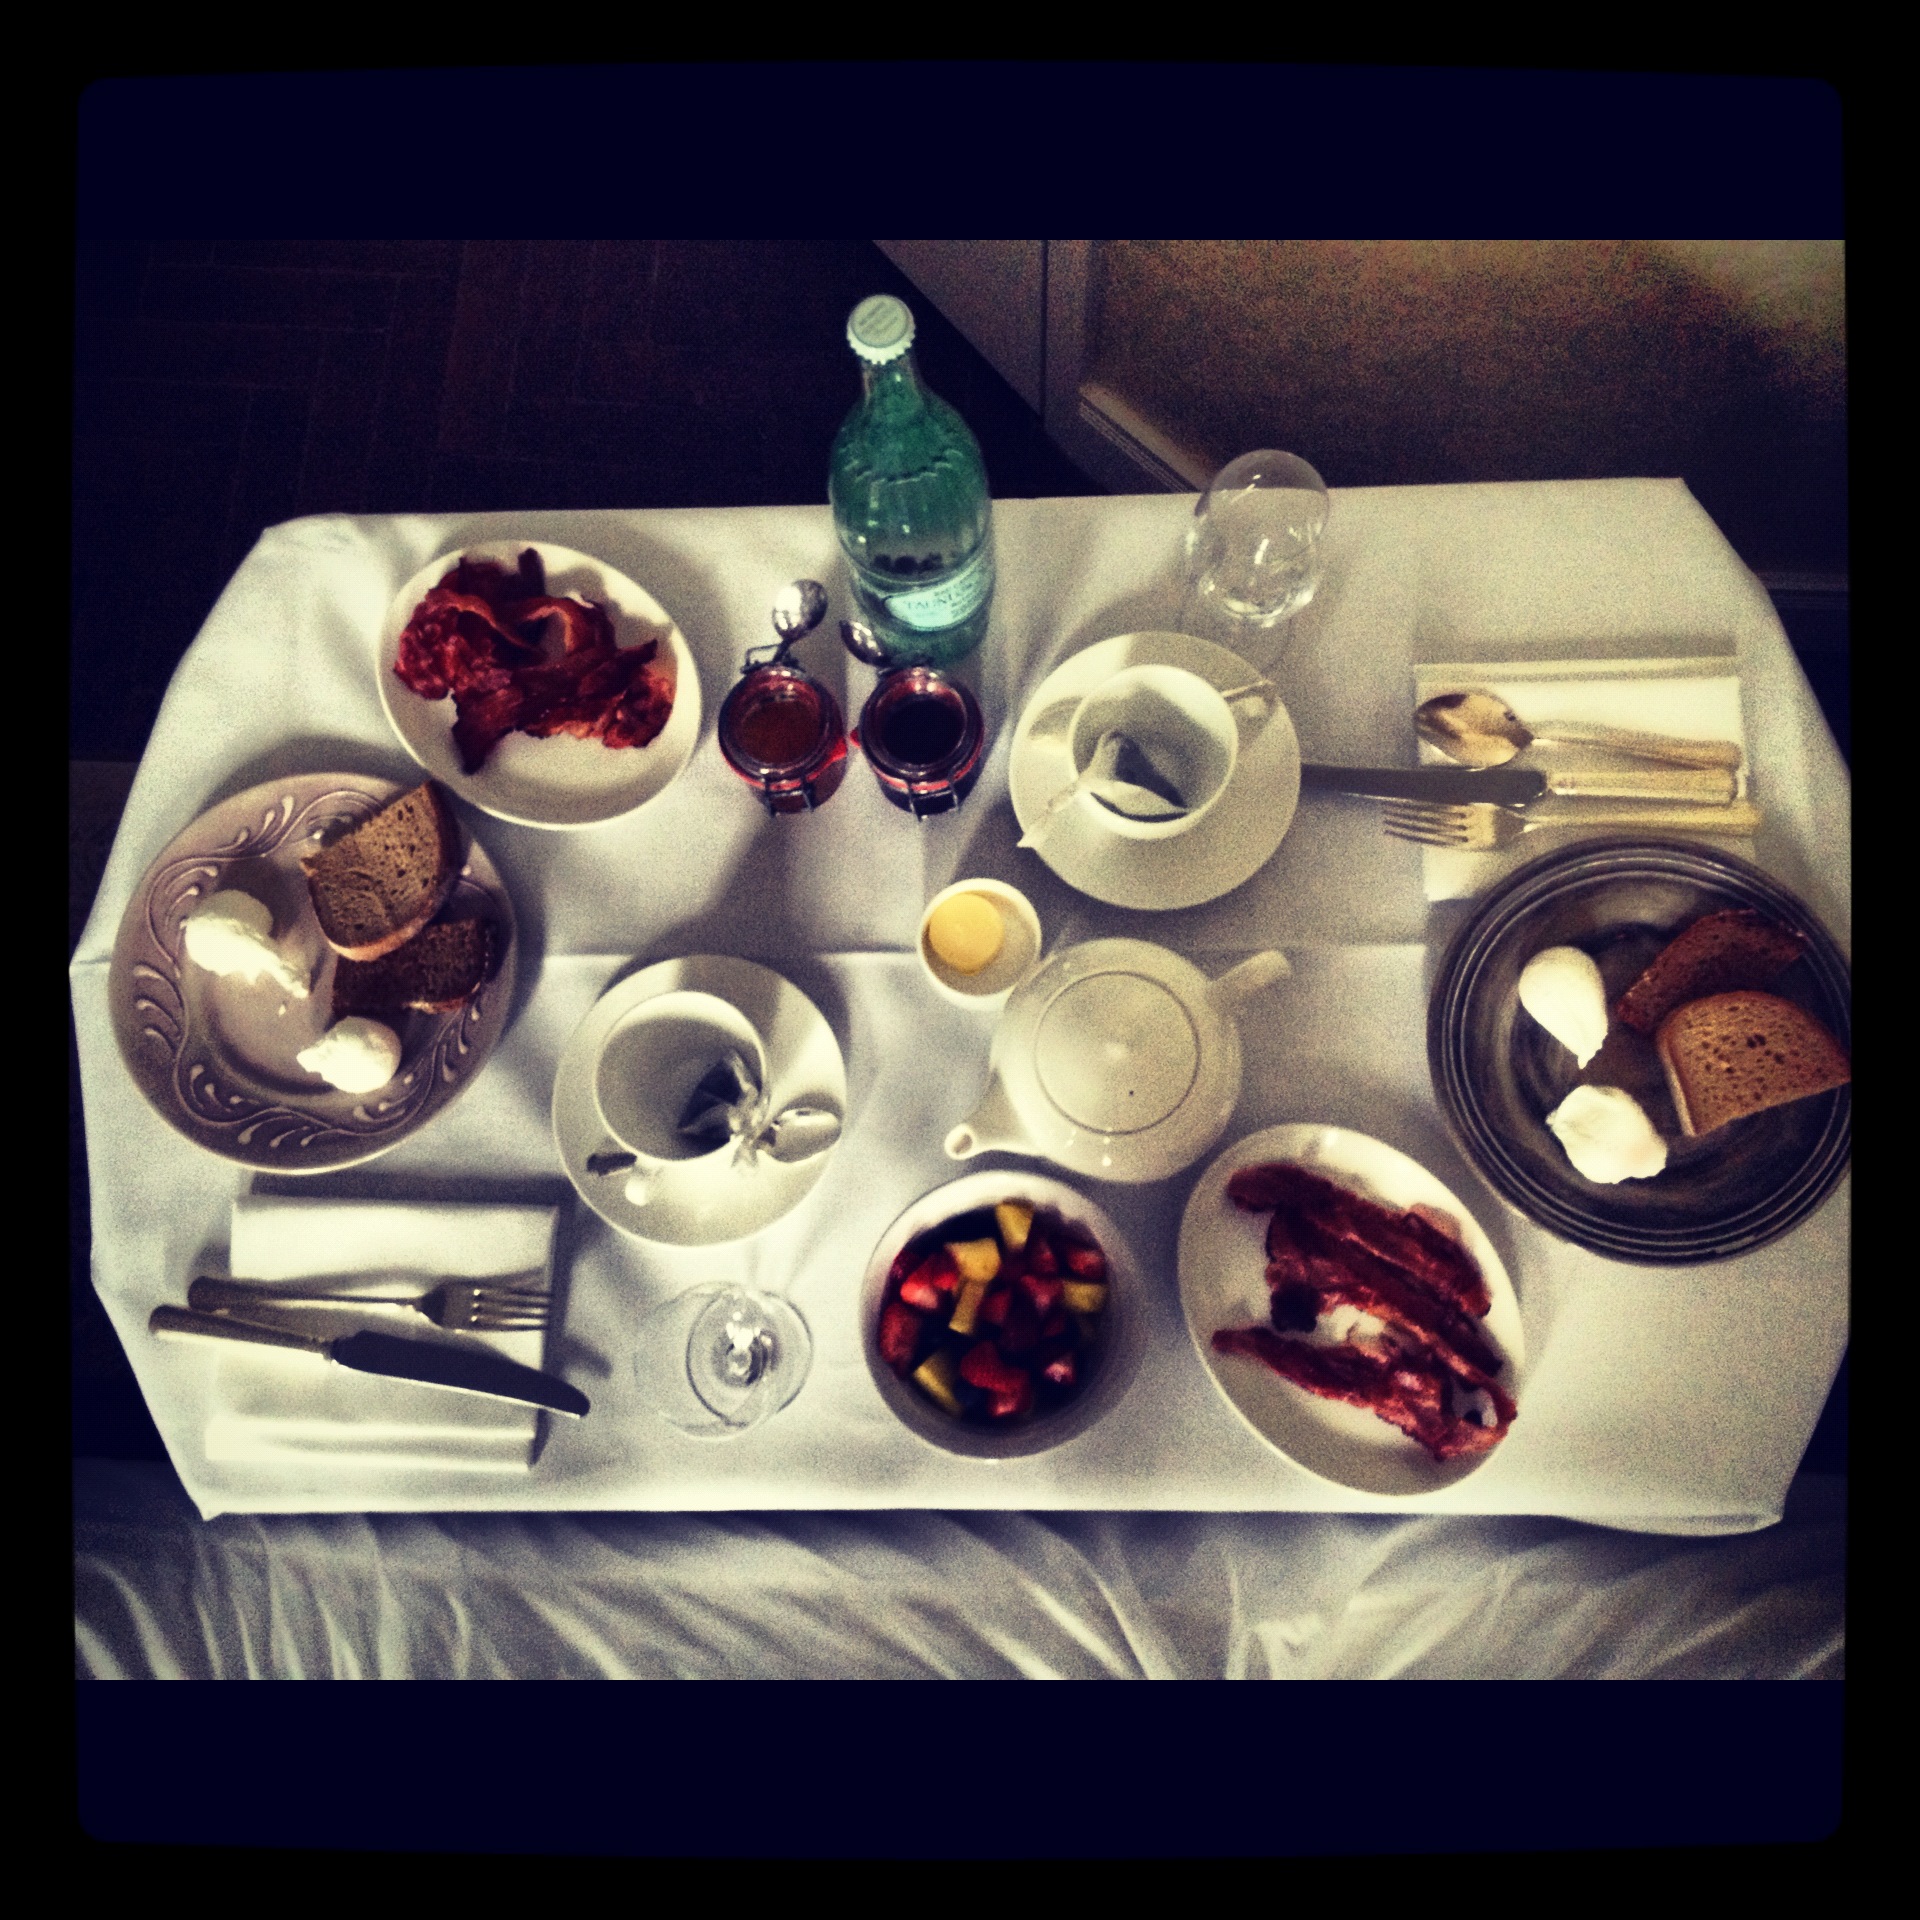 Soho House Berlin Nothing better than Soho House breakfast room service!